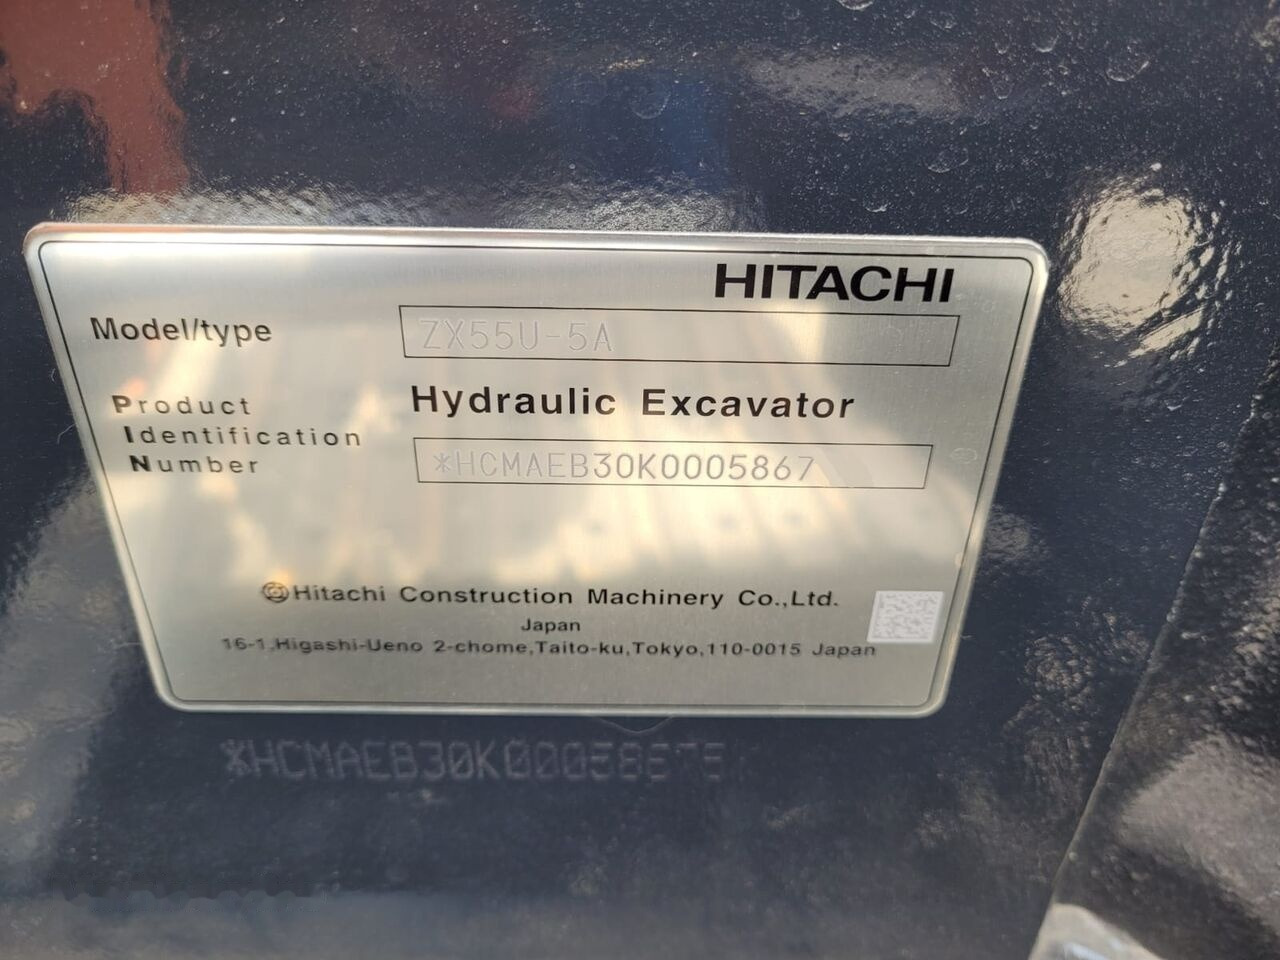 New Mini excavator Hitachi ZX 55U-5A CLR - NOT FOR SALE IN THE EU/NO CE MARKING: picture 10